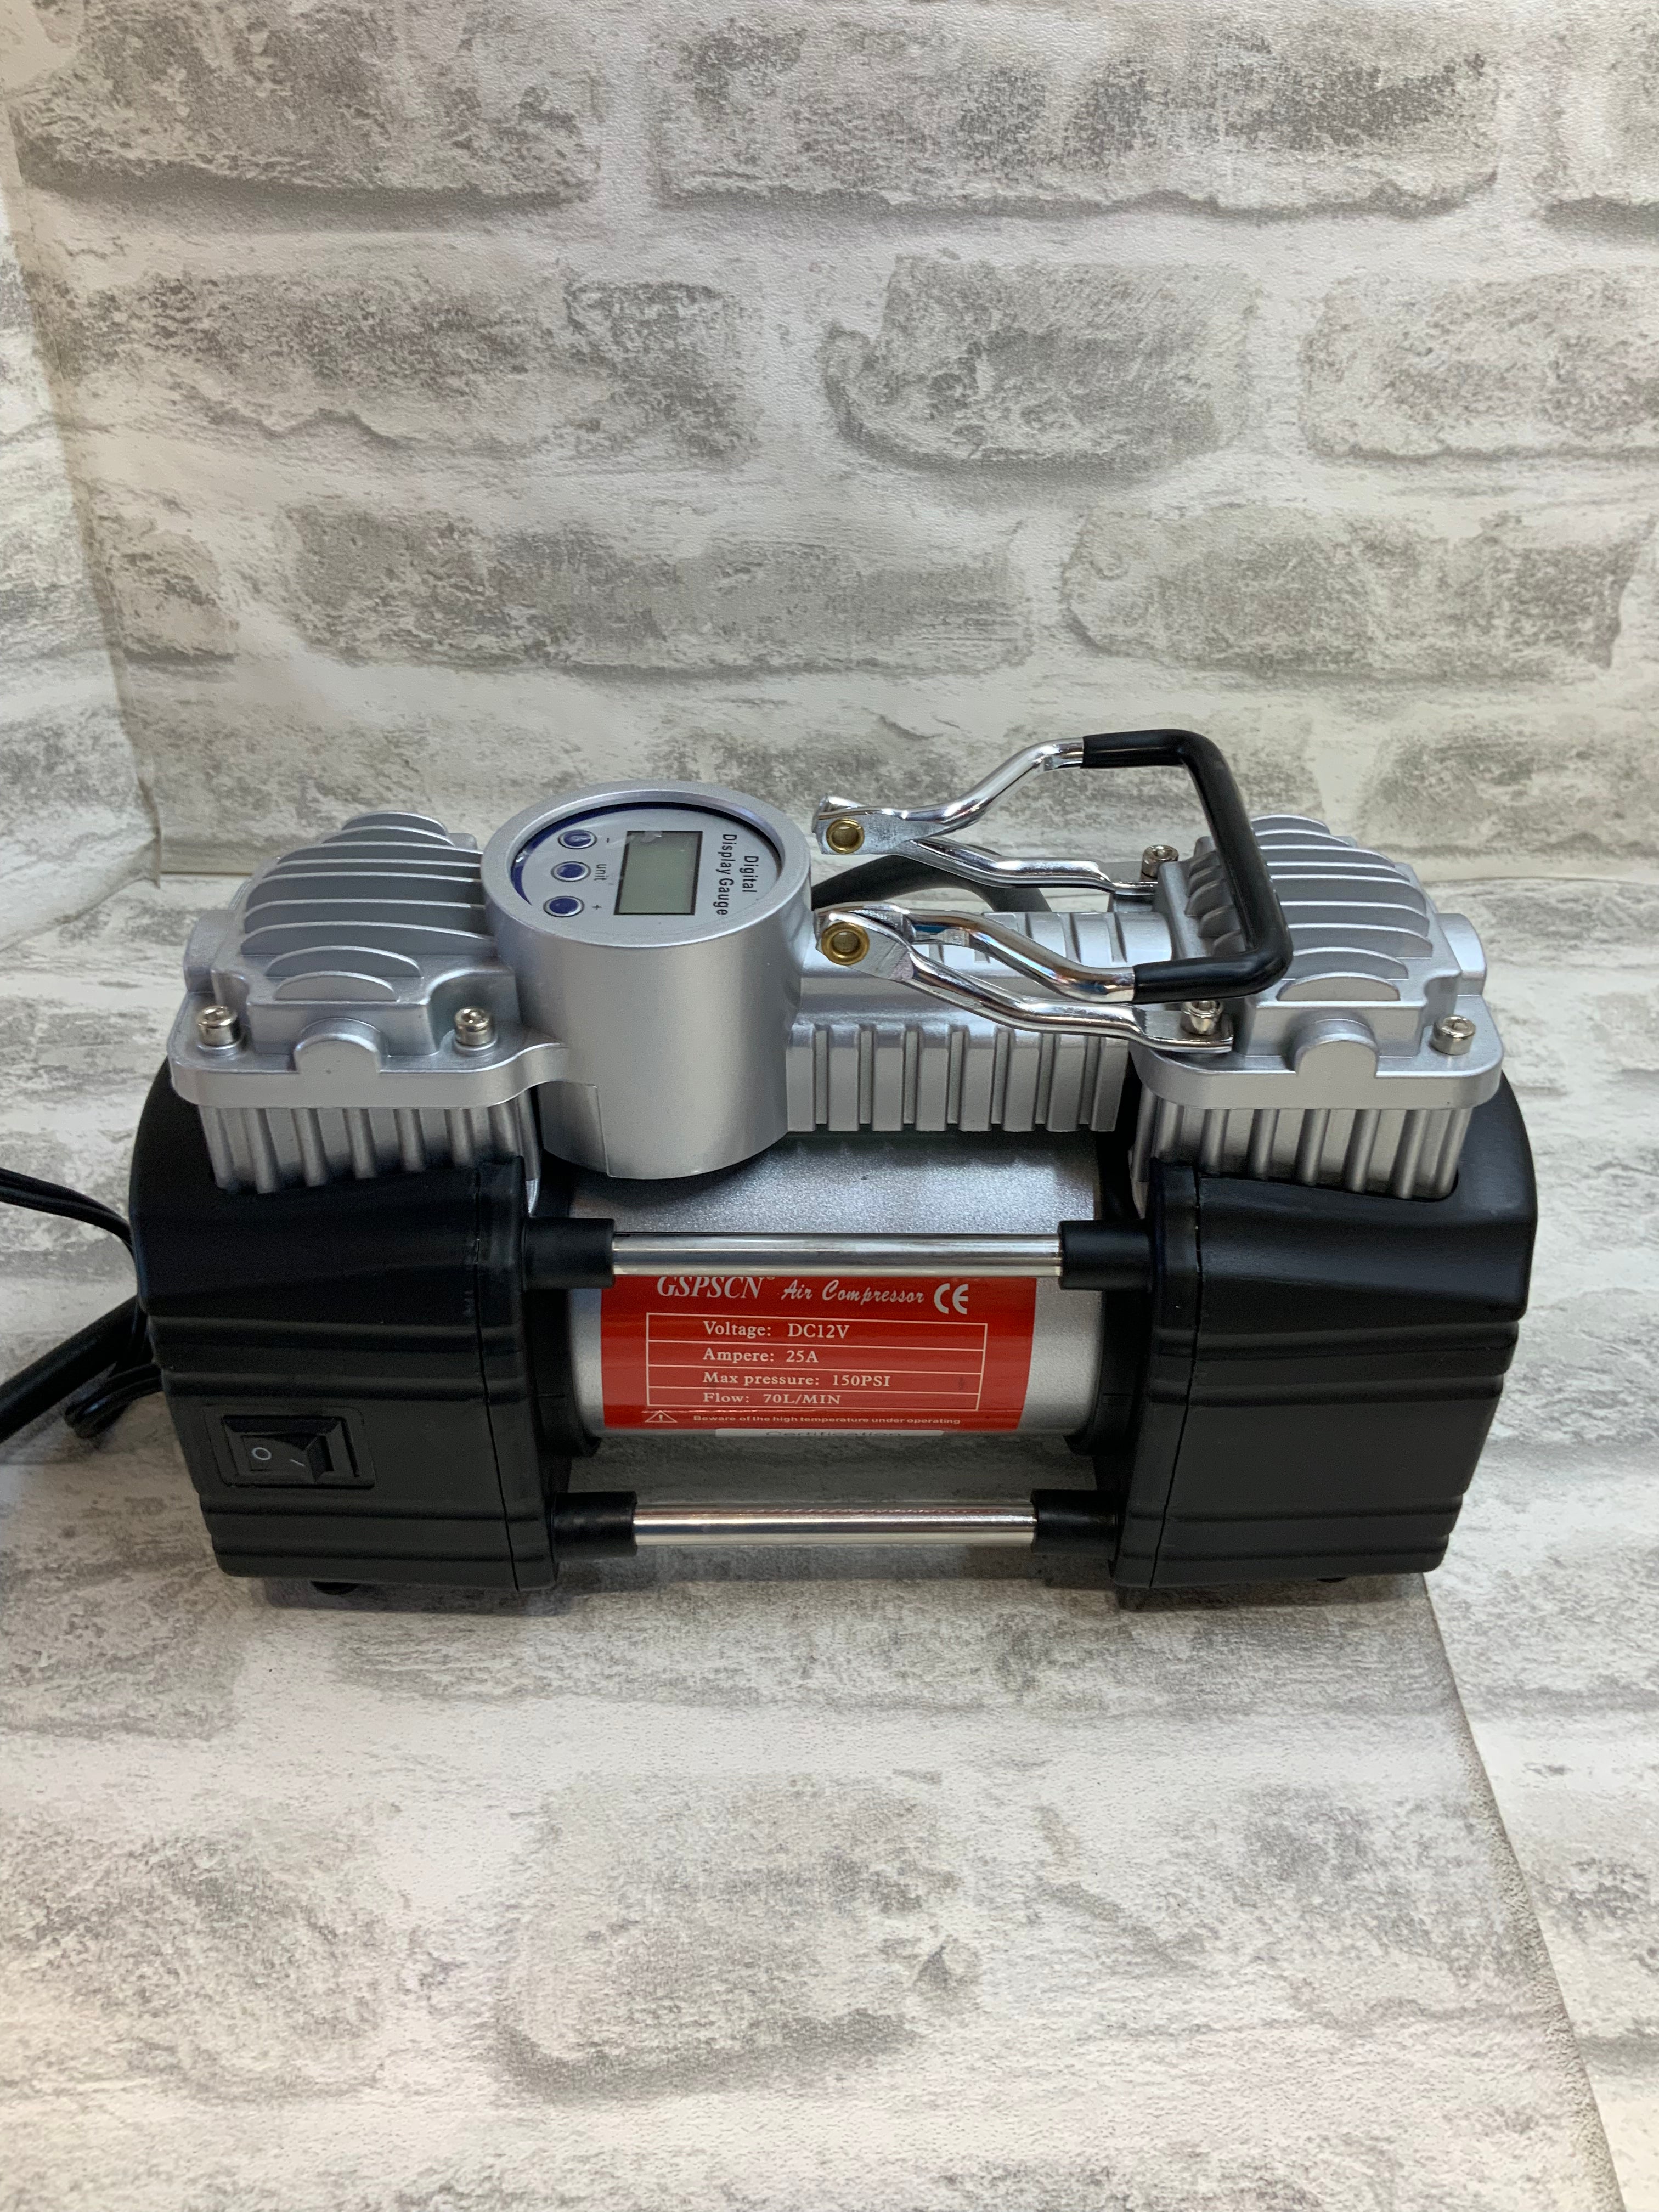 GSPSCN Portable Air Compressor Pump Tire Inflator with Digital Gauge (7579887468782)